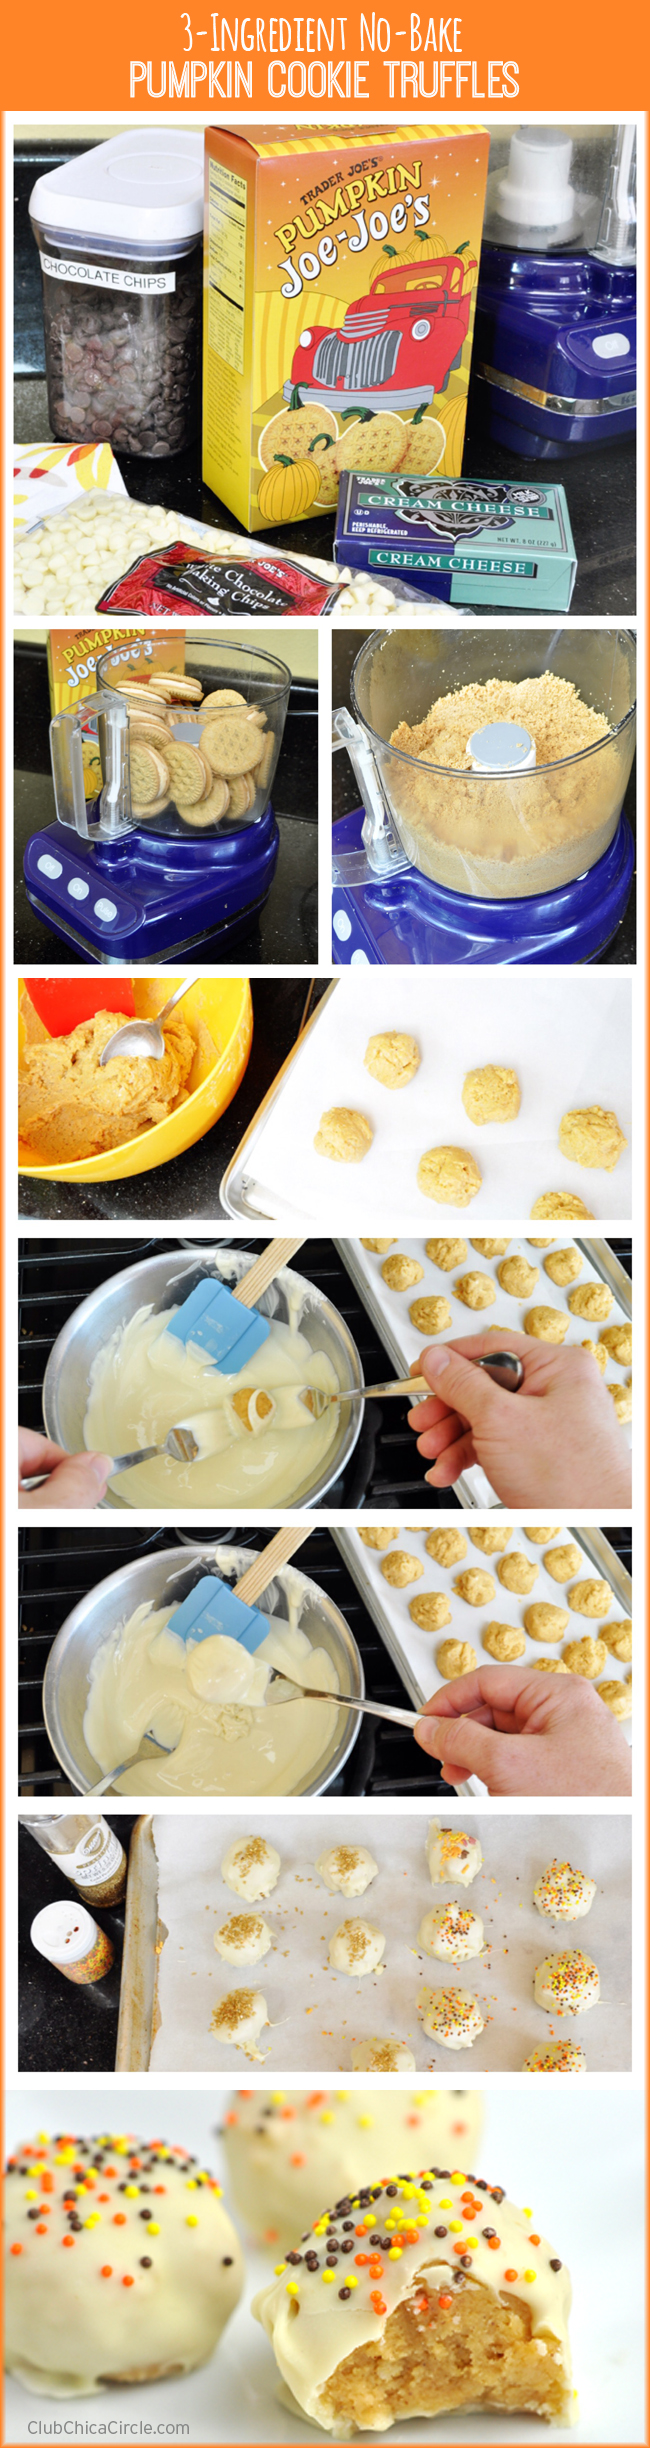 Pumpkin Cookie Truffles Easy Holiday Recipe Idea